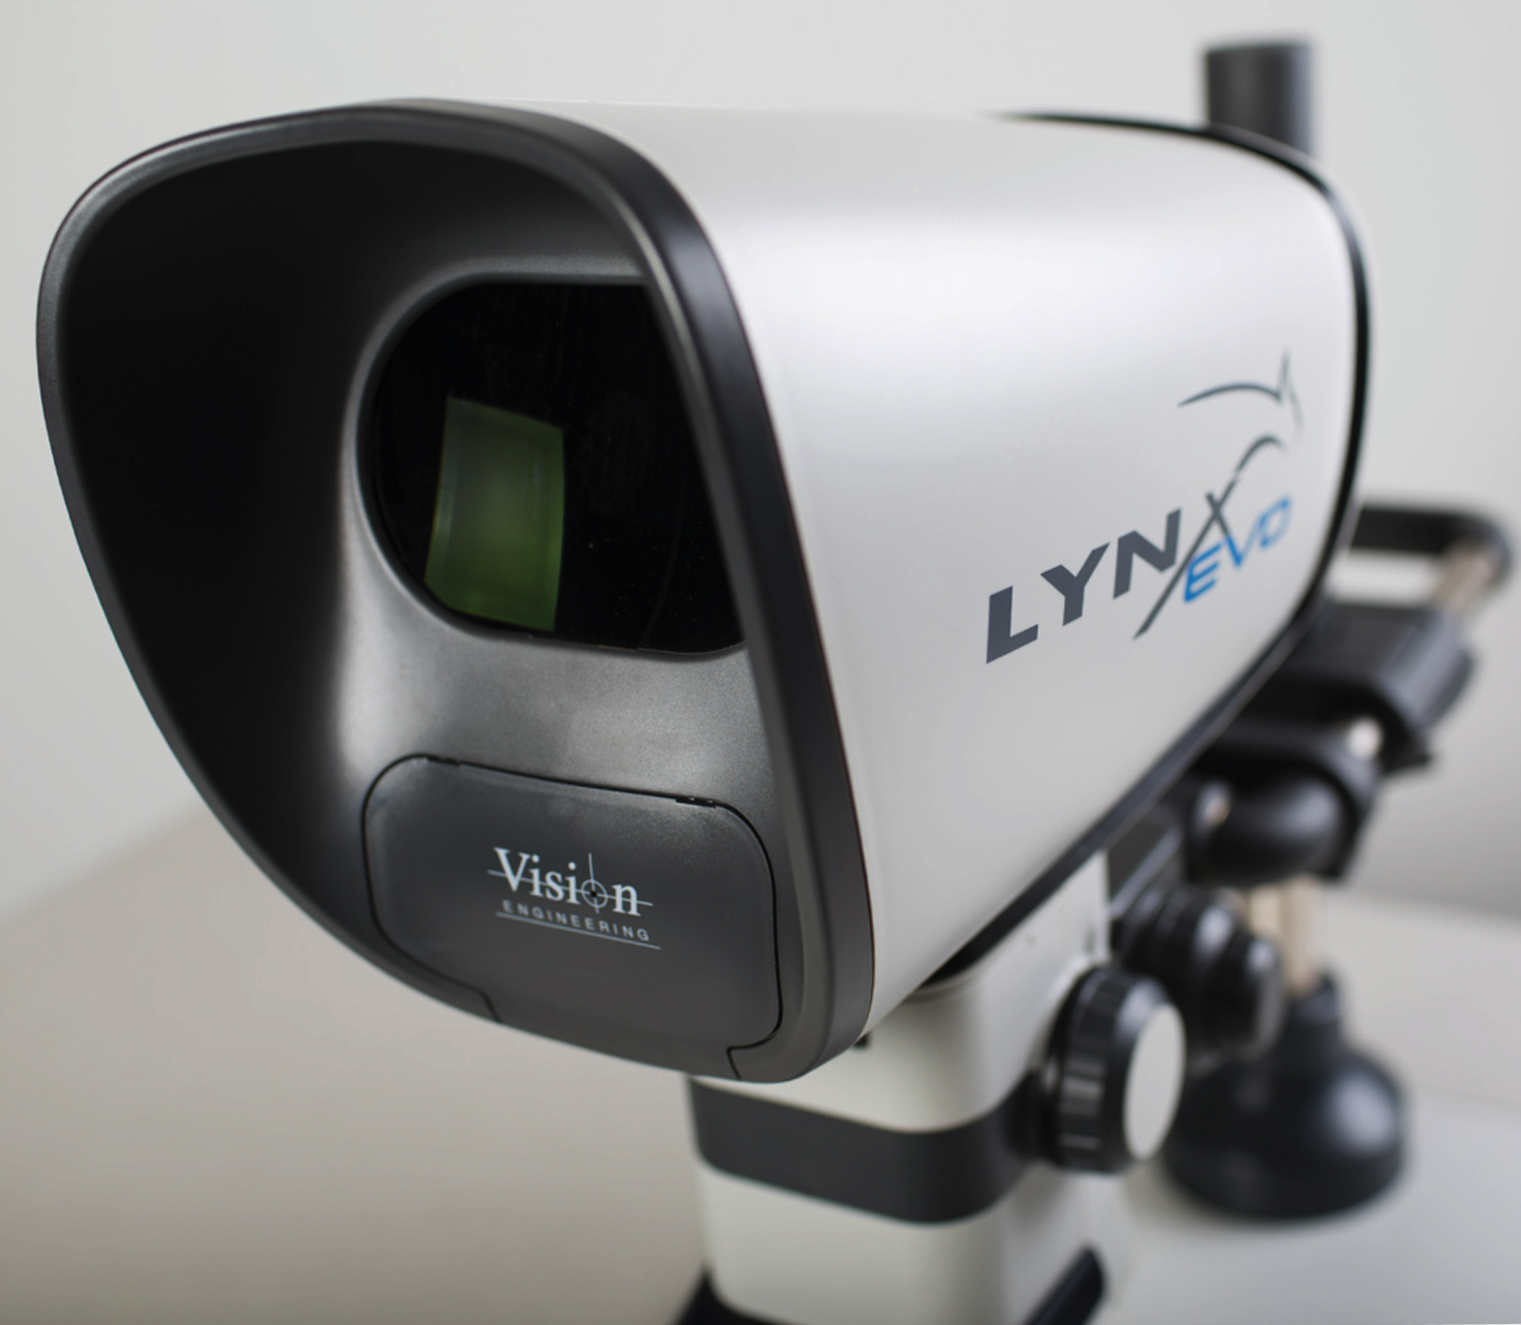 Viewing head of Lynx EVO eyepiece-less stereo microscope